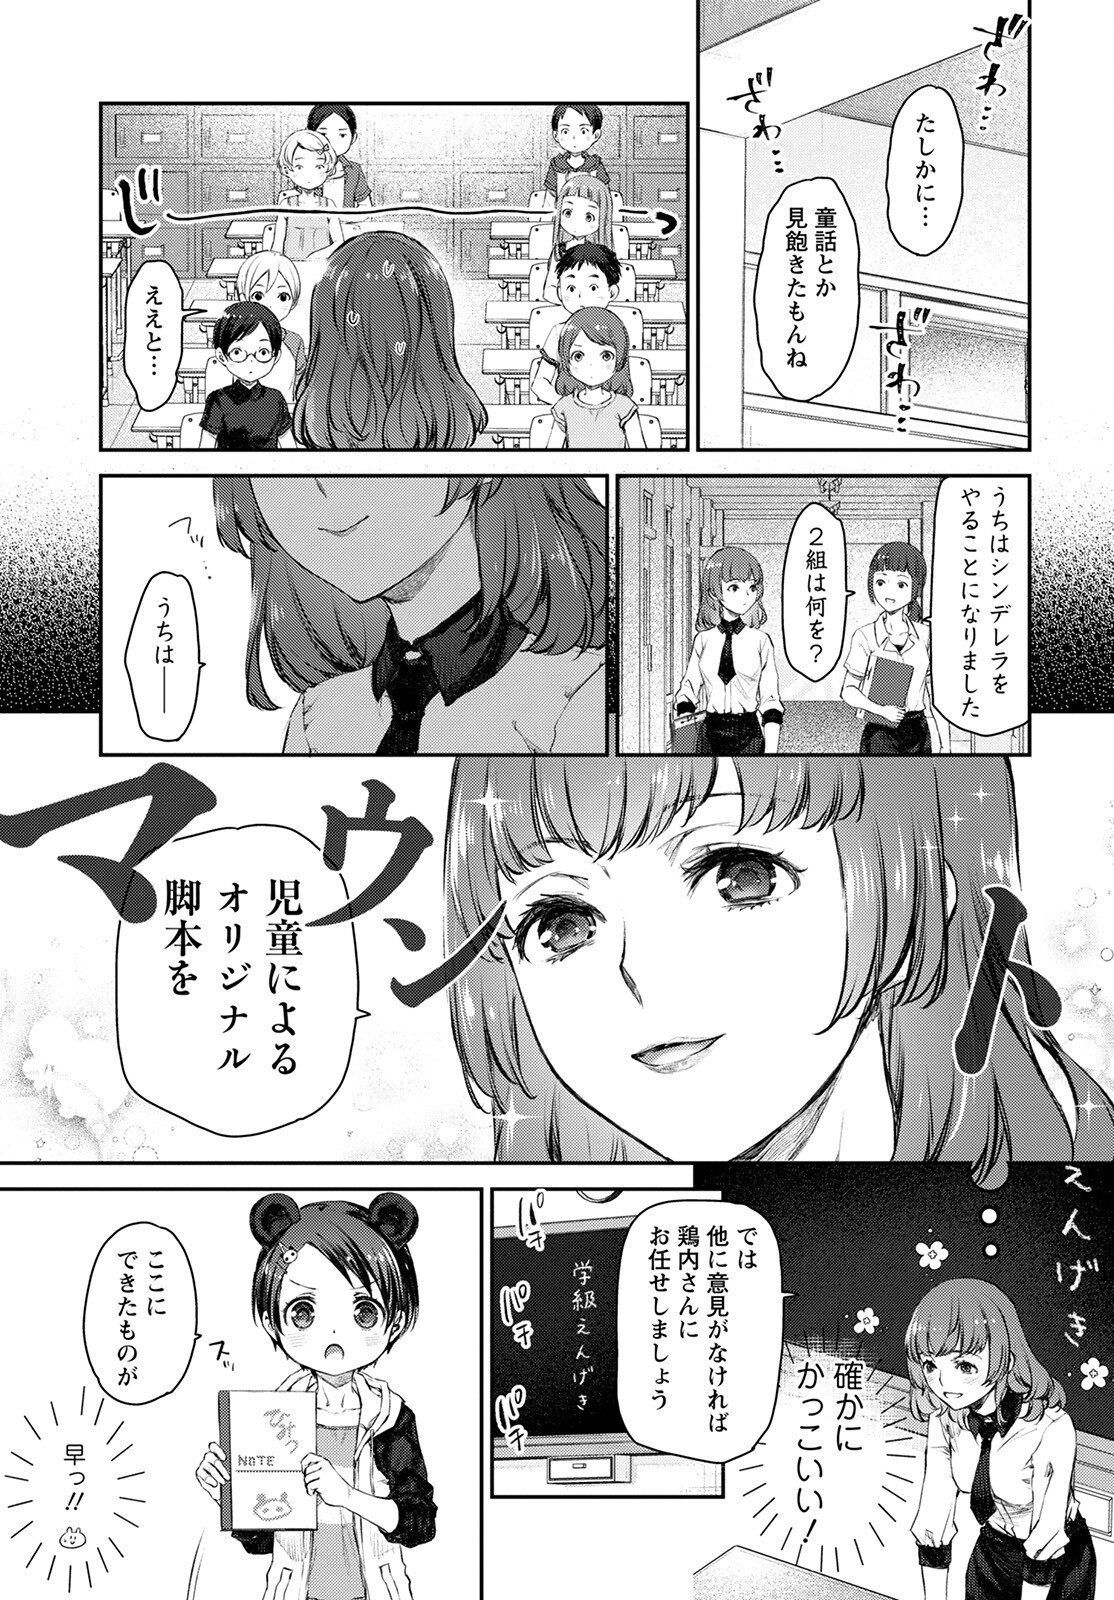 Uchi no Maid ga Uzasugiru! - Chapter 53 - Page 5